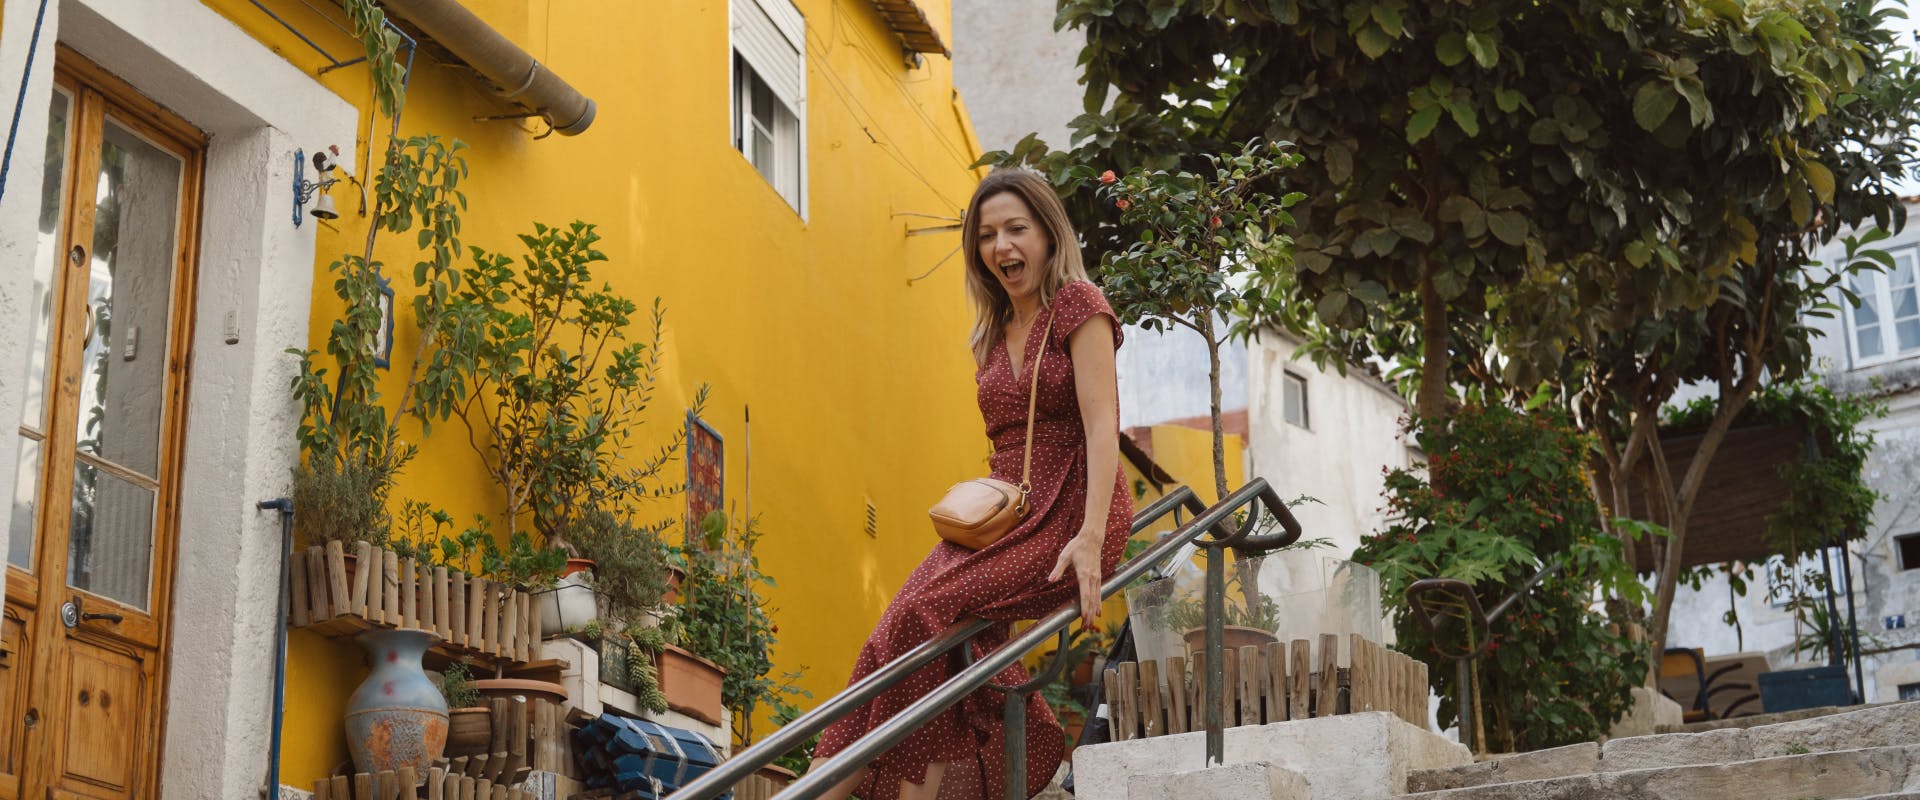 A solo female traveler slides down a banister in Lisbon.